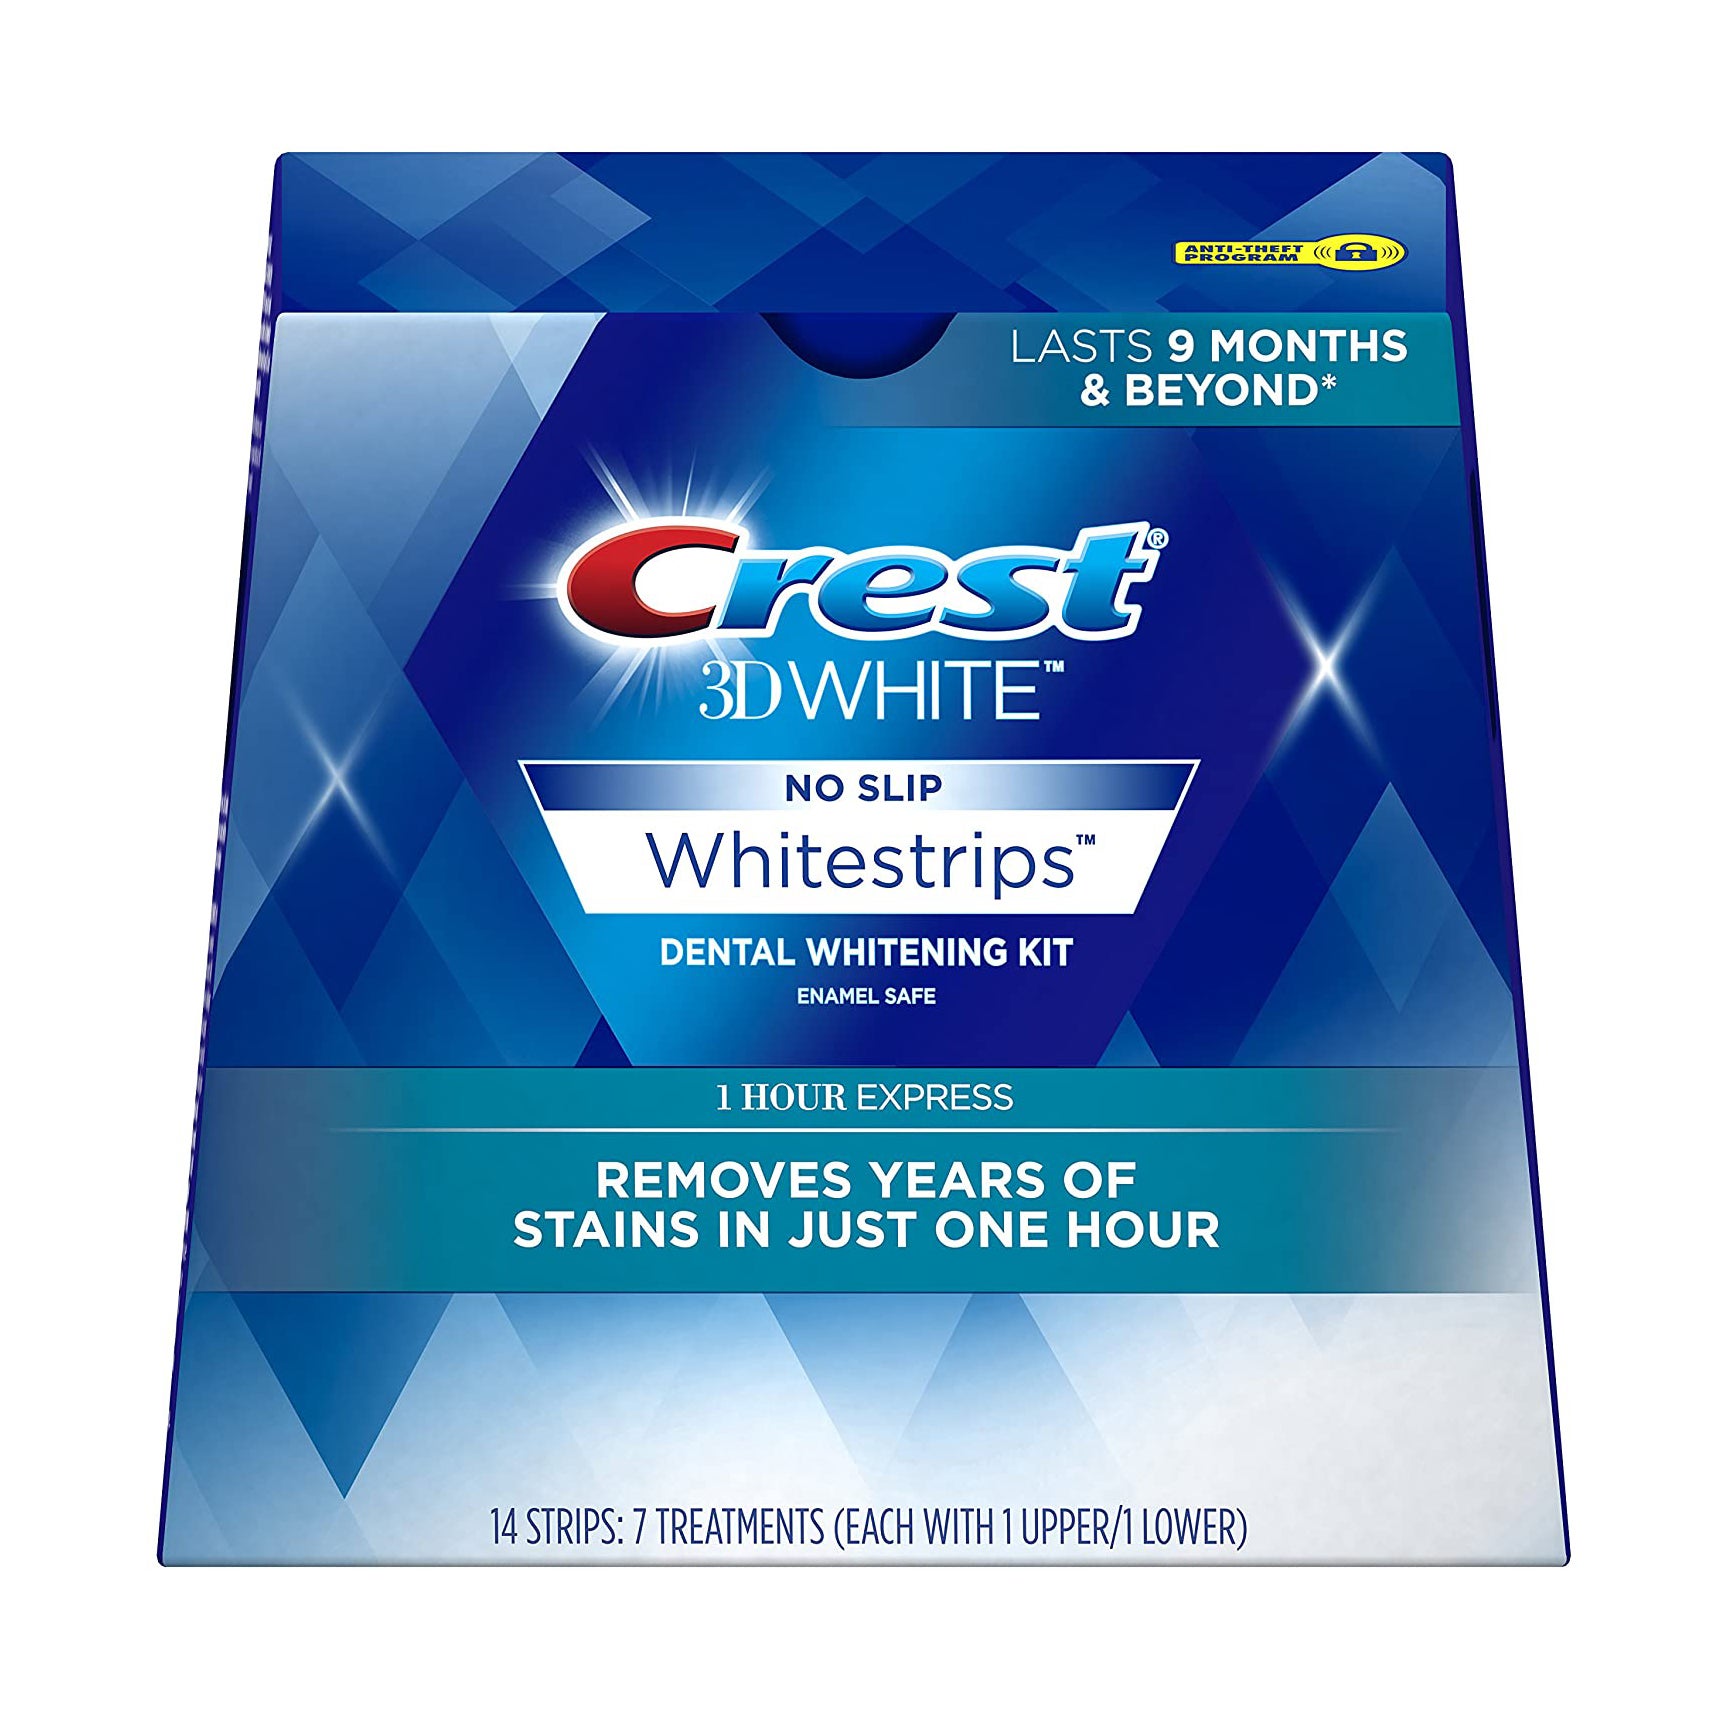 Crest 3D Whitestrips 1 Hour Express Teeth Whitening Kit, 7 Treatments